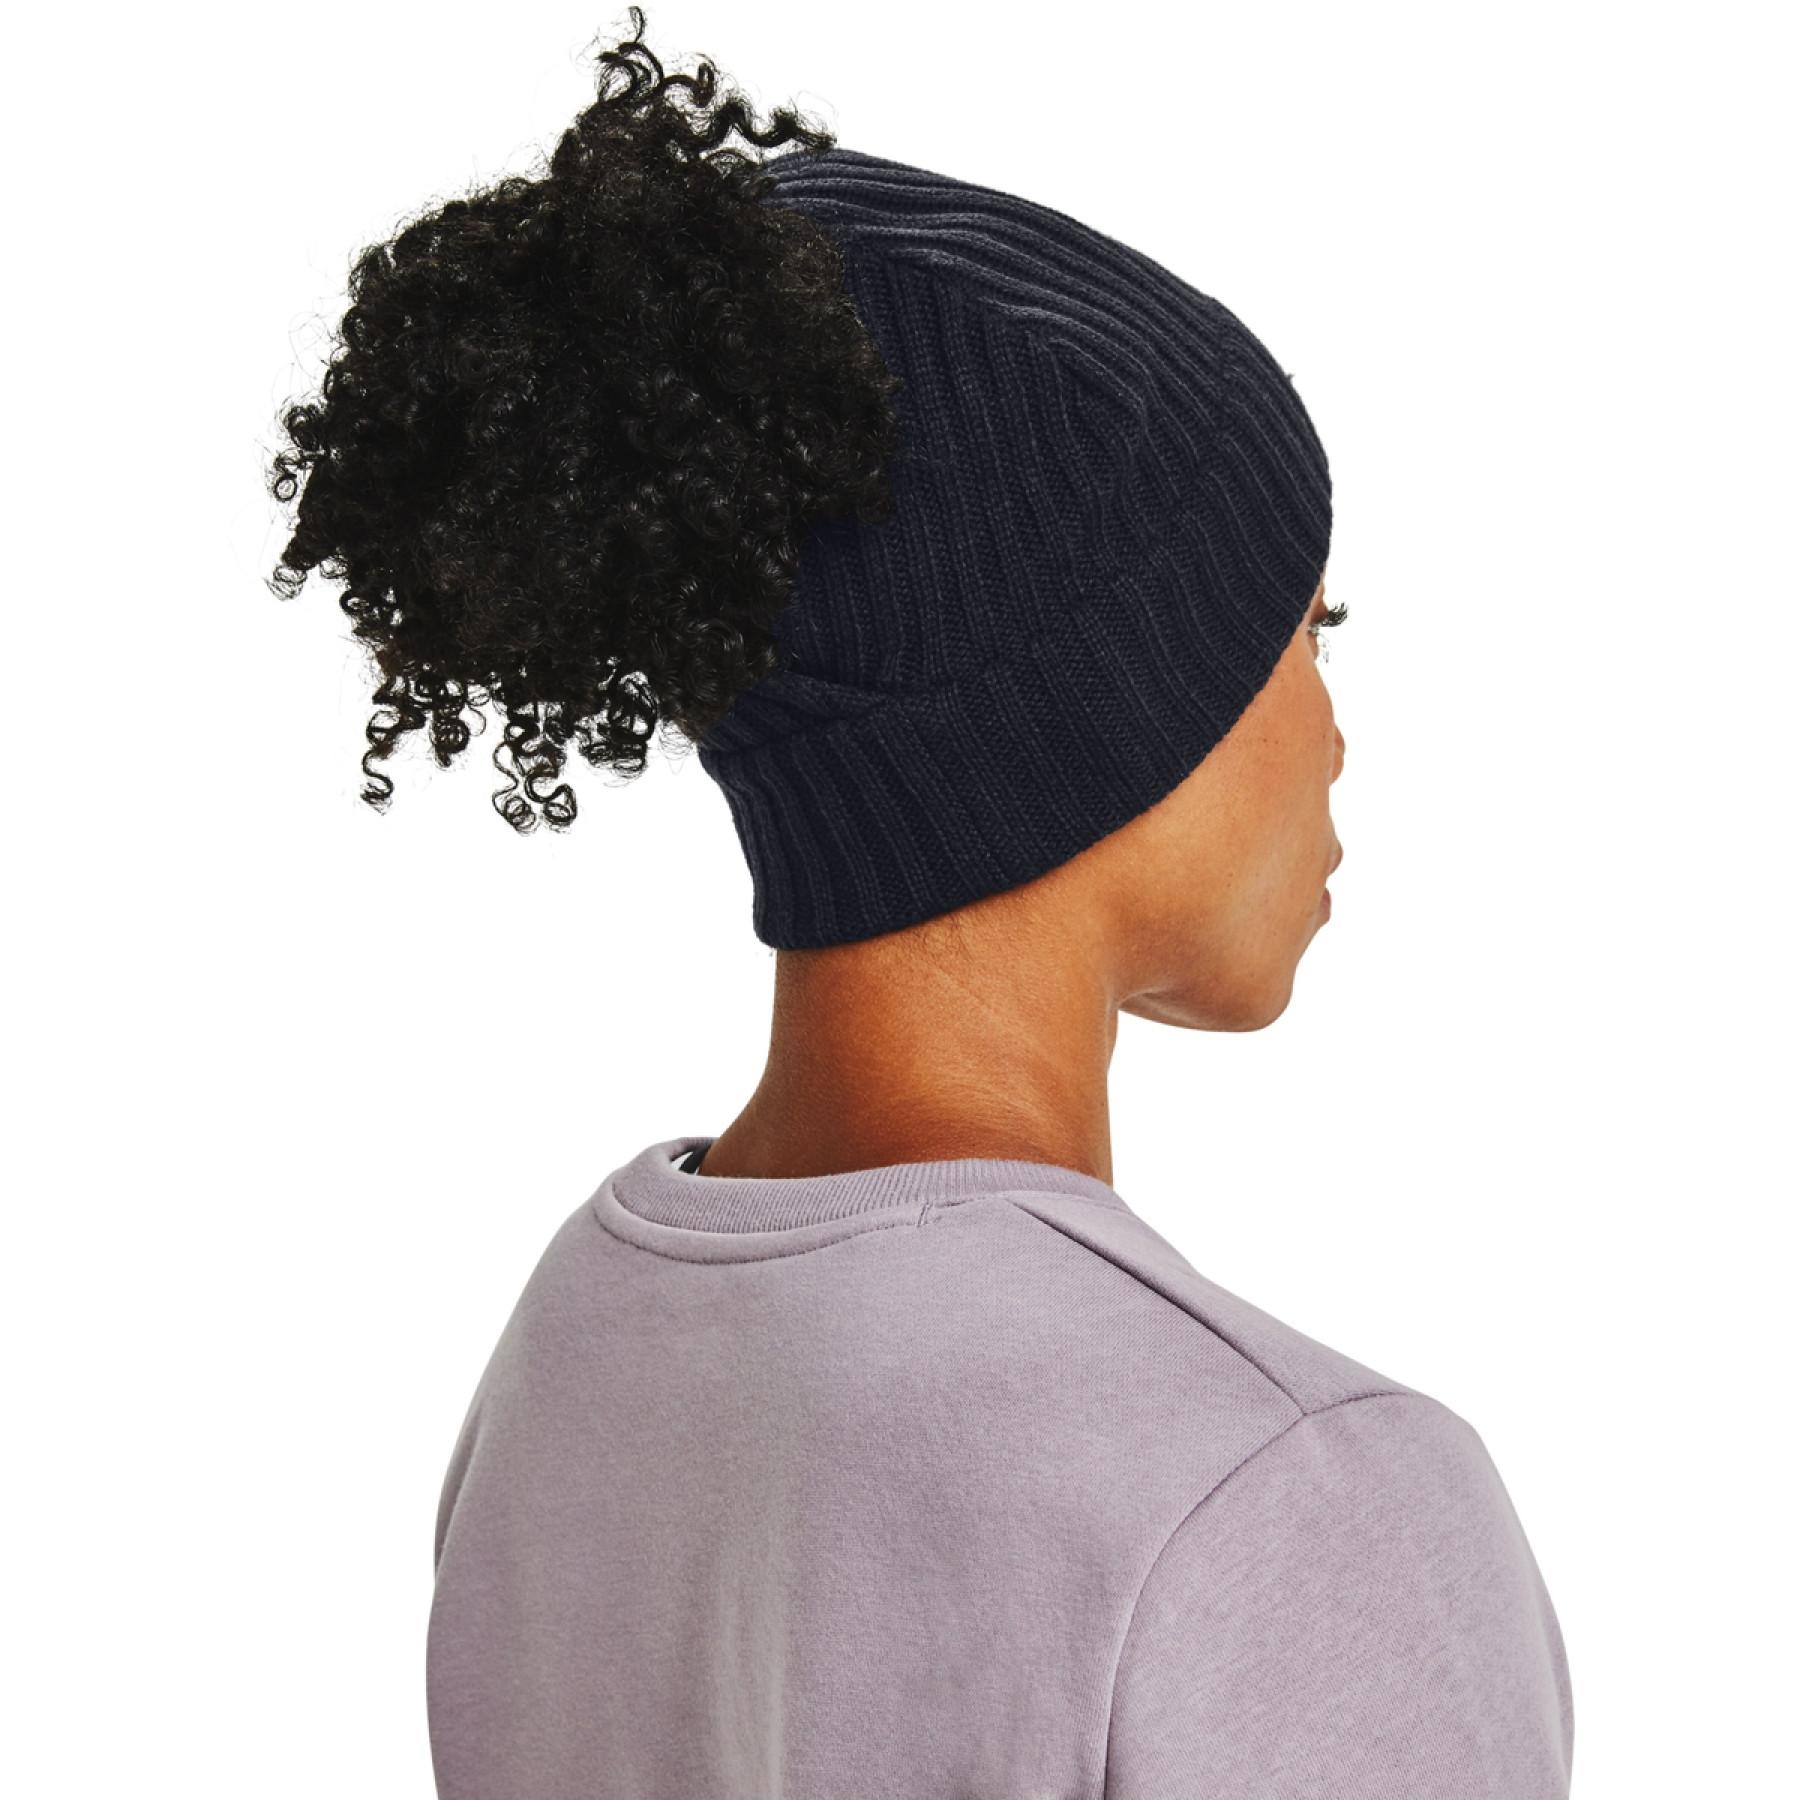 Women's hat Under Armour Multi Hair